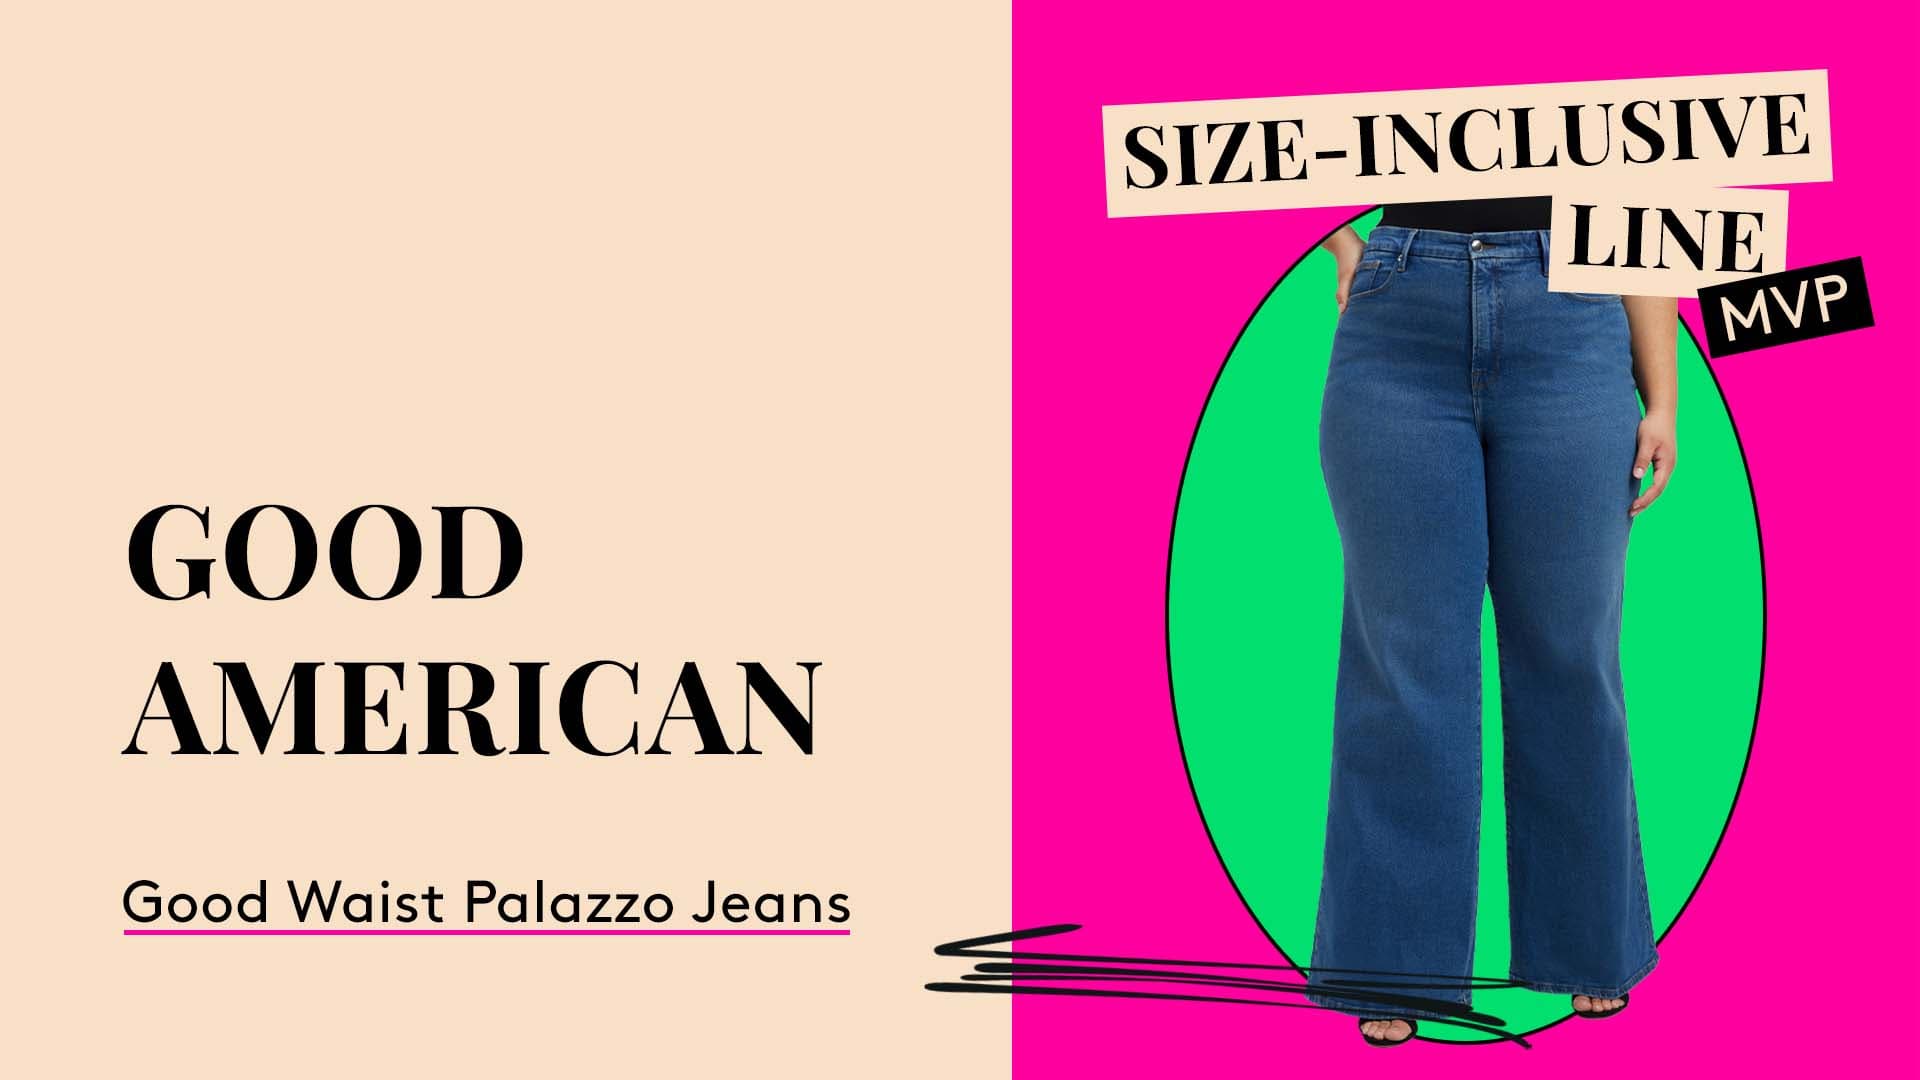 Size-Inclusive Line MVP. Good American Good Waist Palazzo Jeans.